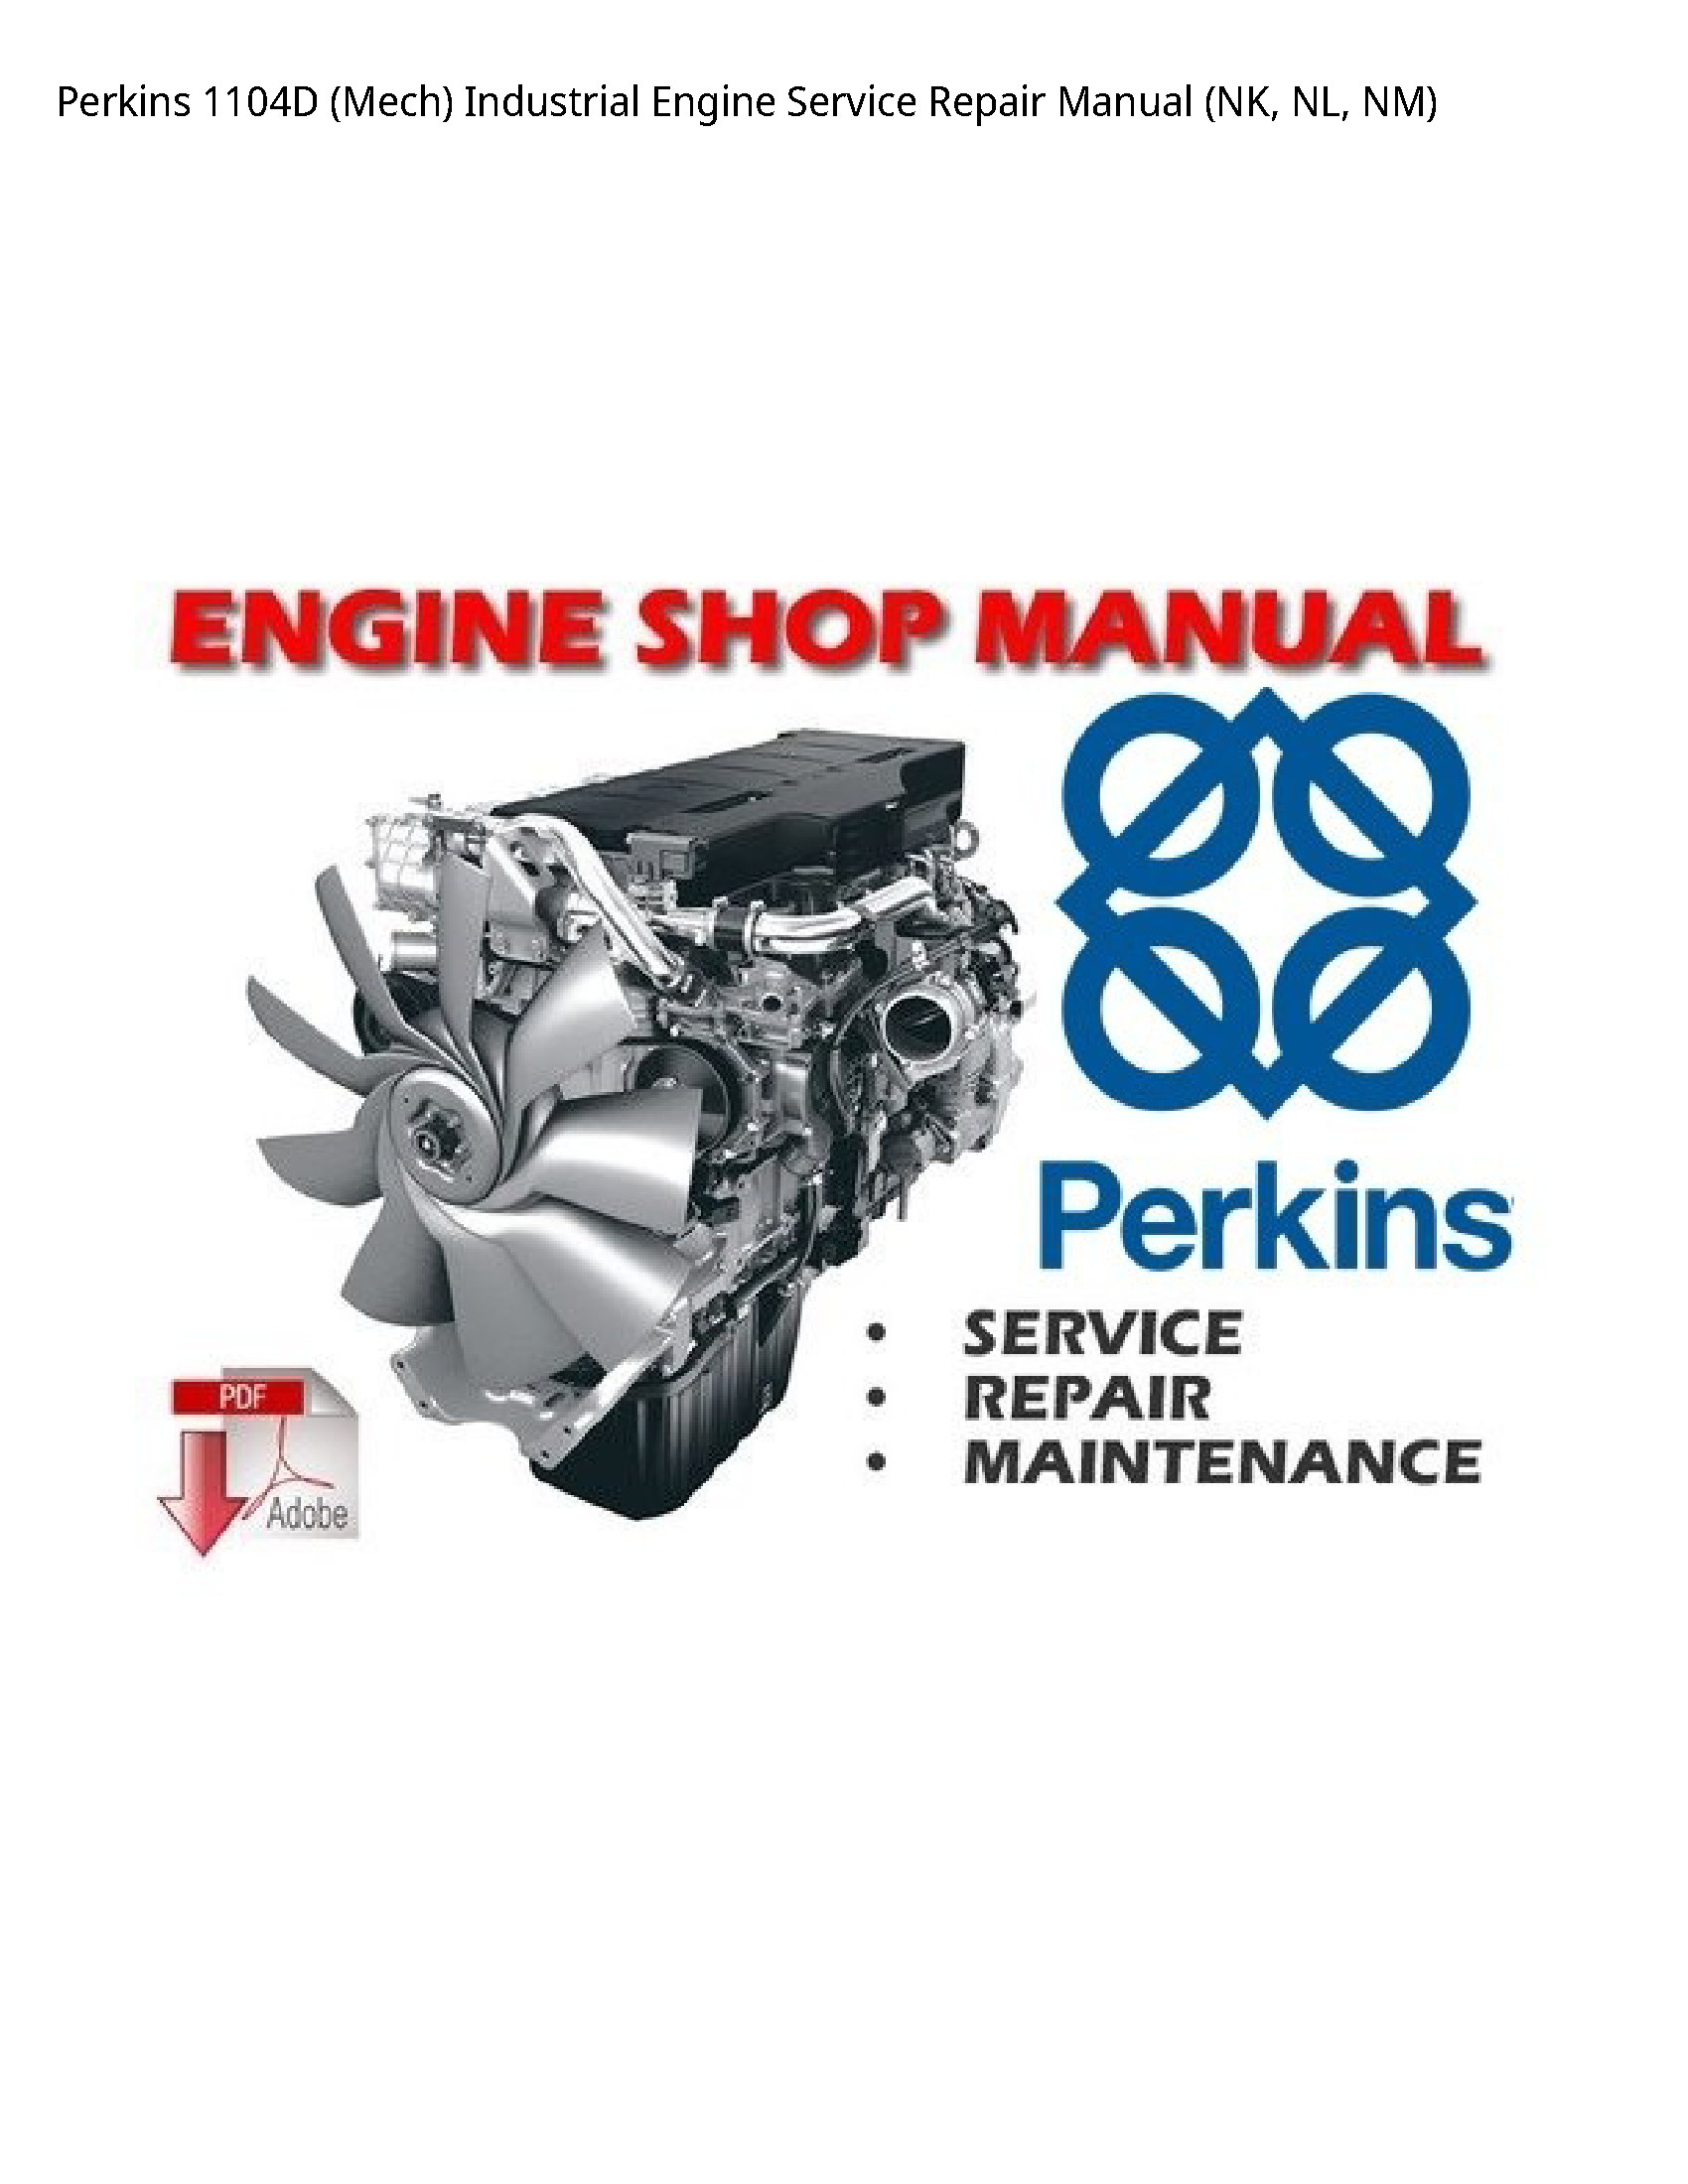 Perkins 1104D (Mech) Industrial Engine manual